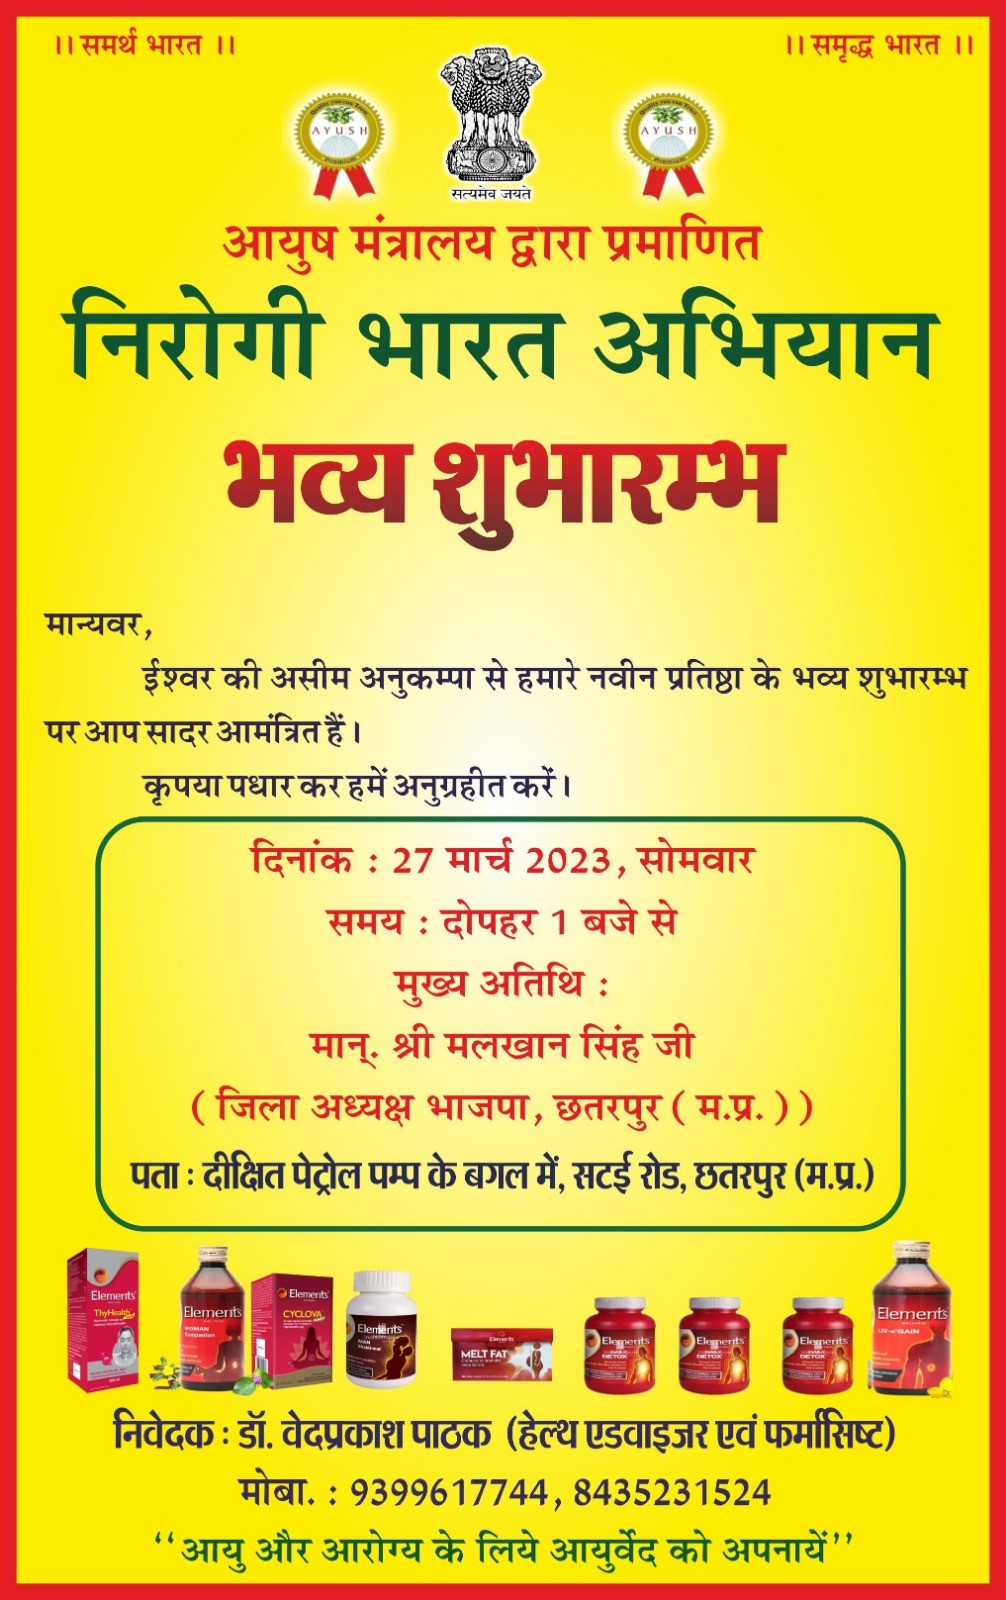 Pathak Wellness center chhatarpur m.p 